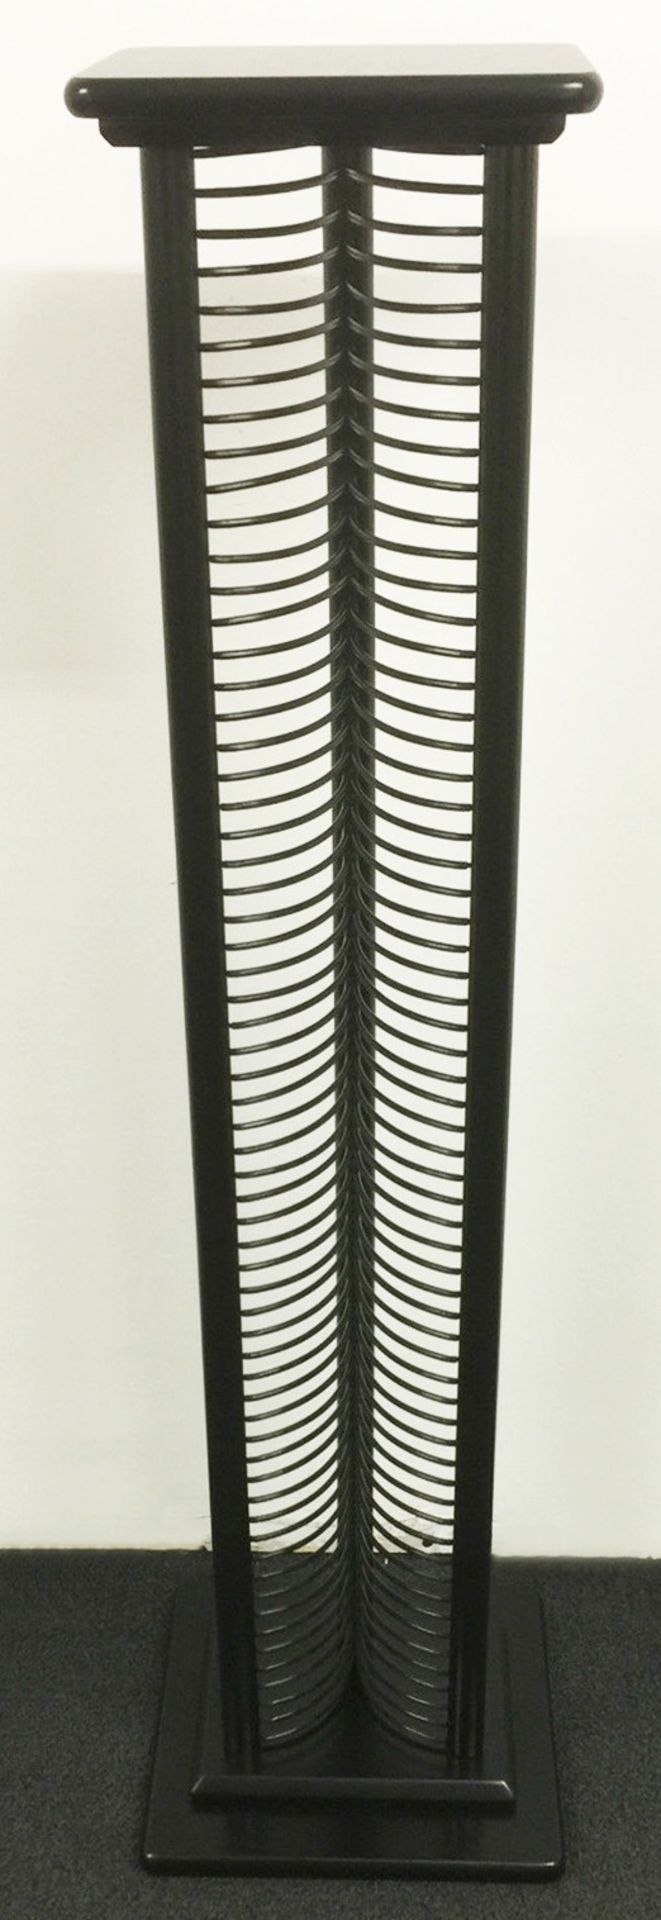 4 x Black Wooden Upright CD Racks - Interchangeable Plastic Shelves - 105cm High With 60 CD Capacity